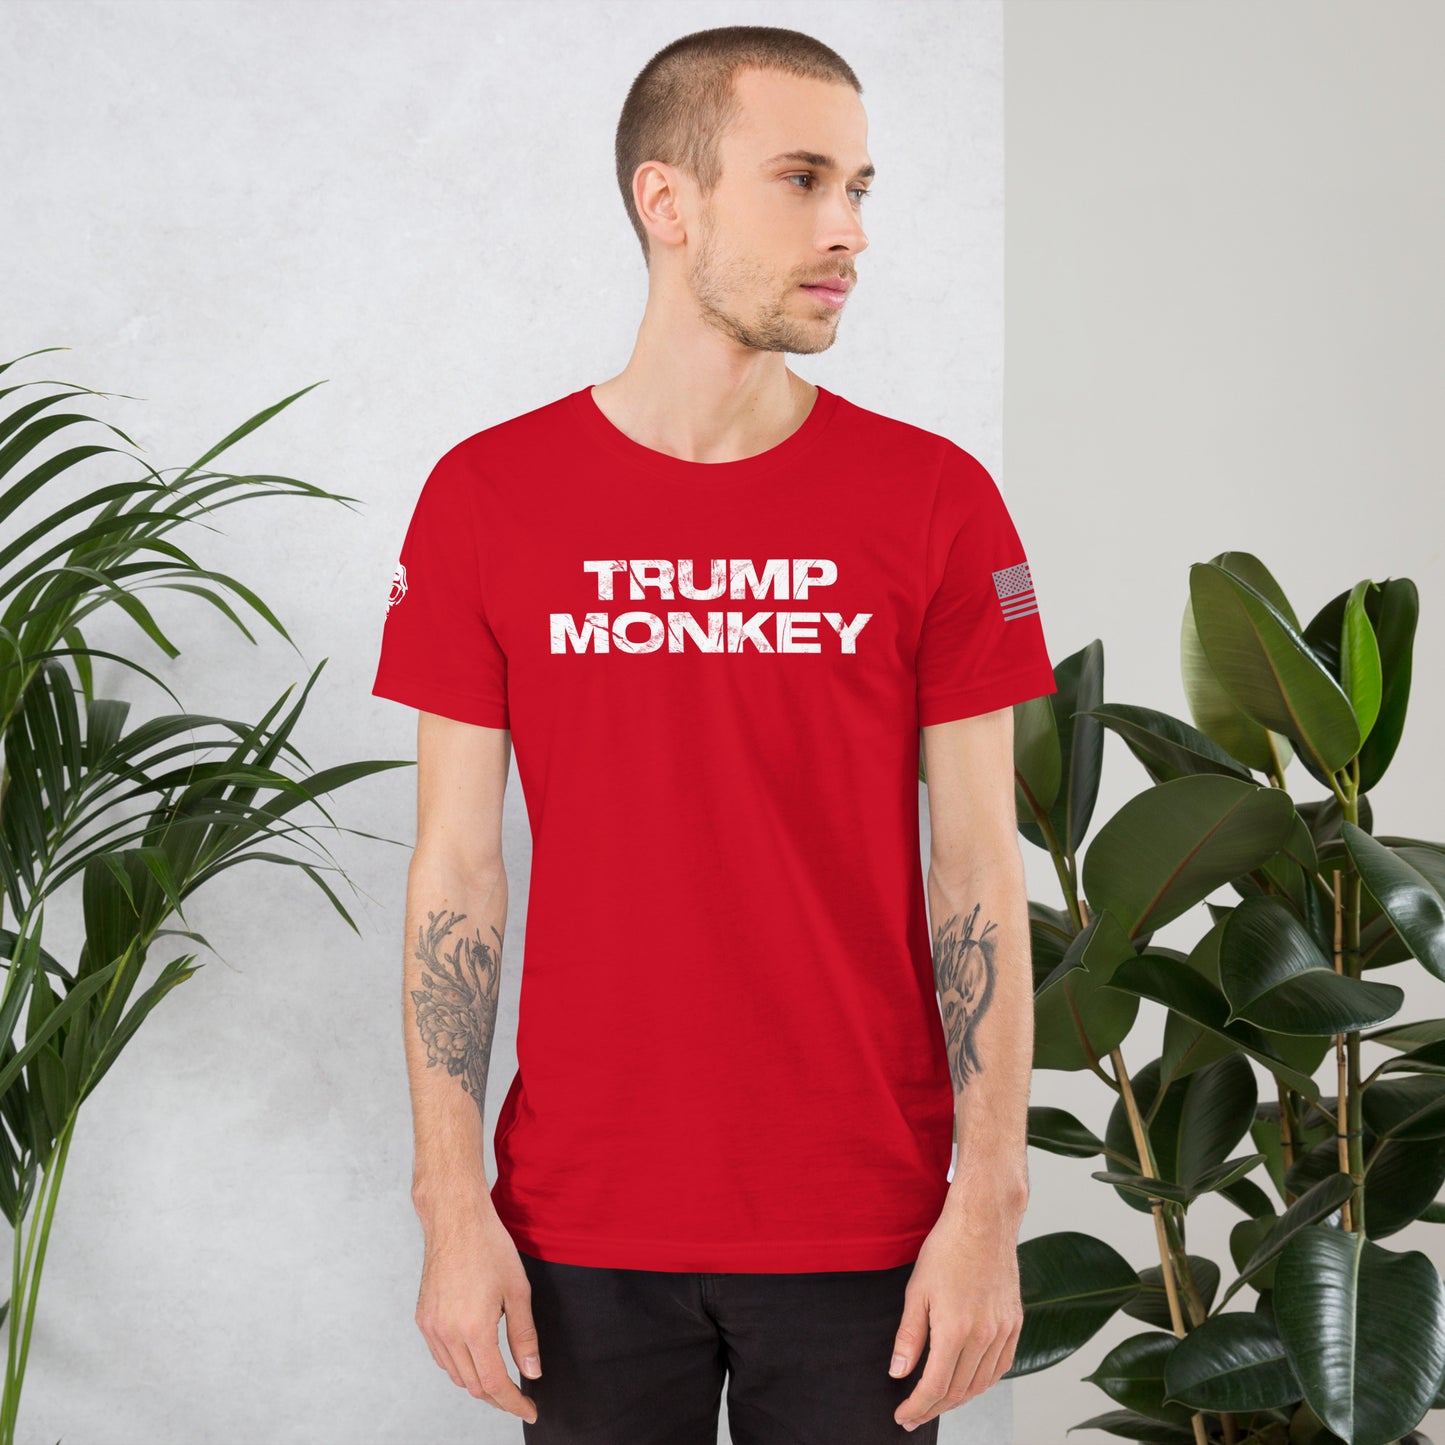 Trump Monkey Tee